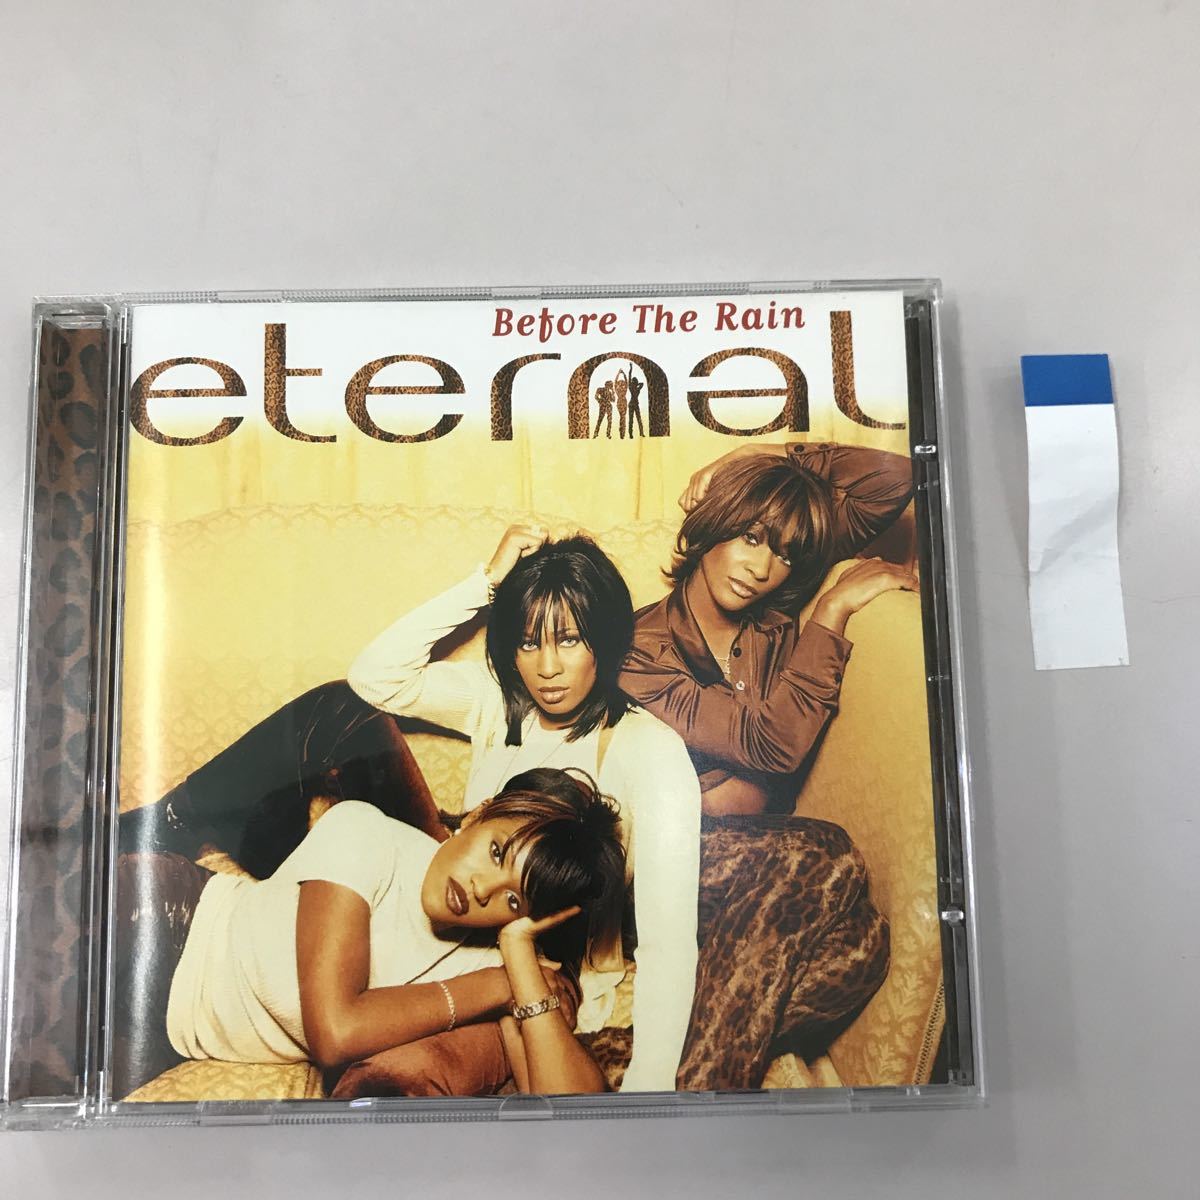 CD 低価格の 輸入盤 中古 eternal 限定販売 長期保存品 洋楽